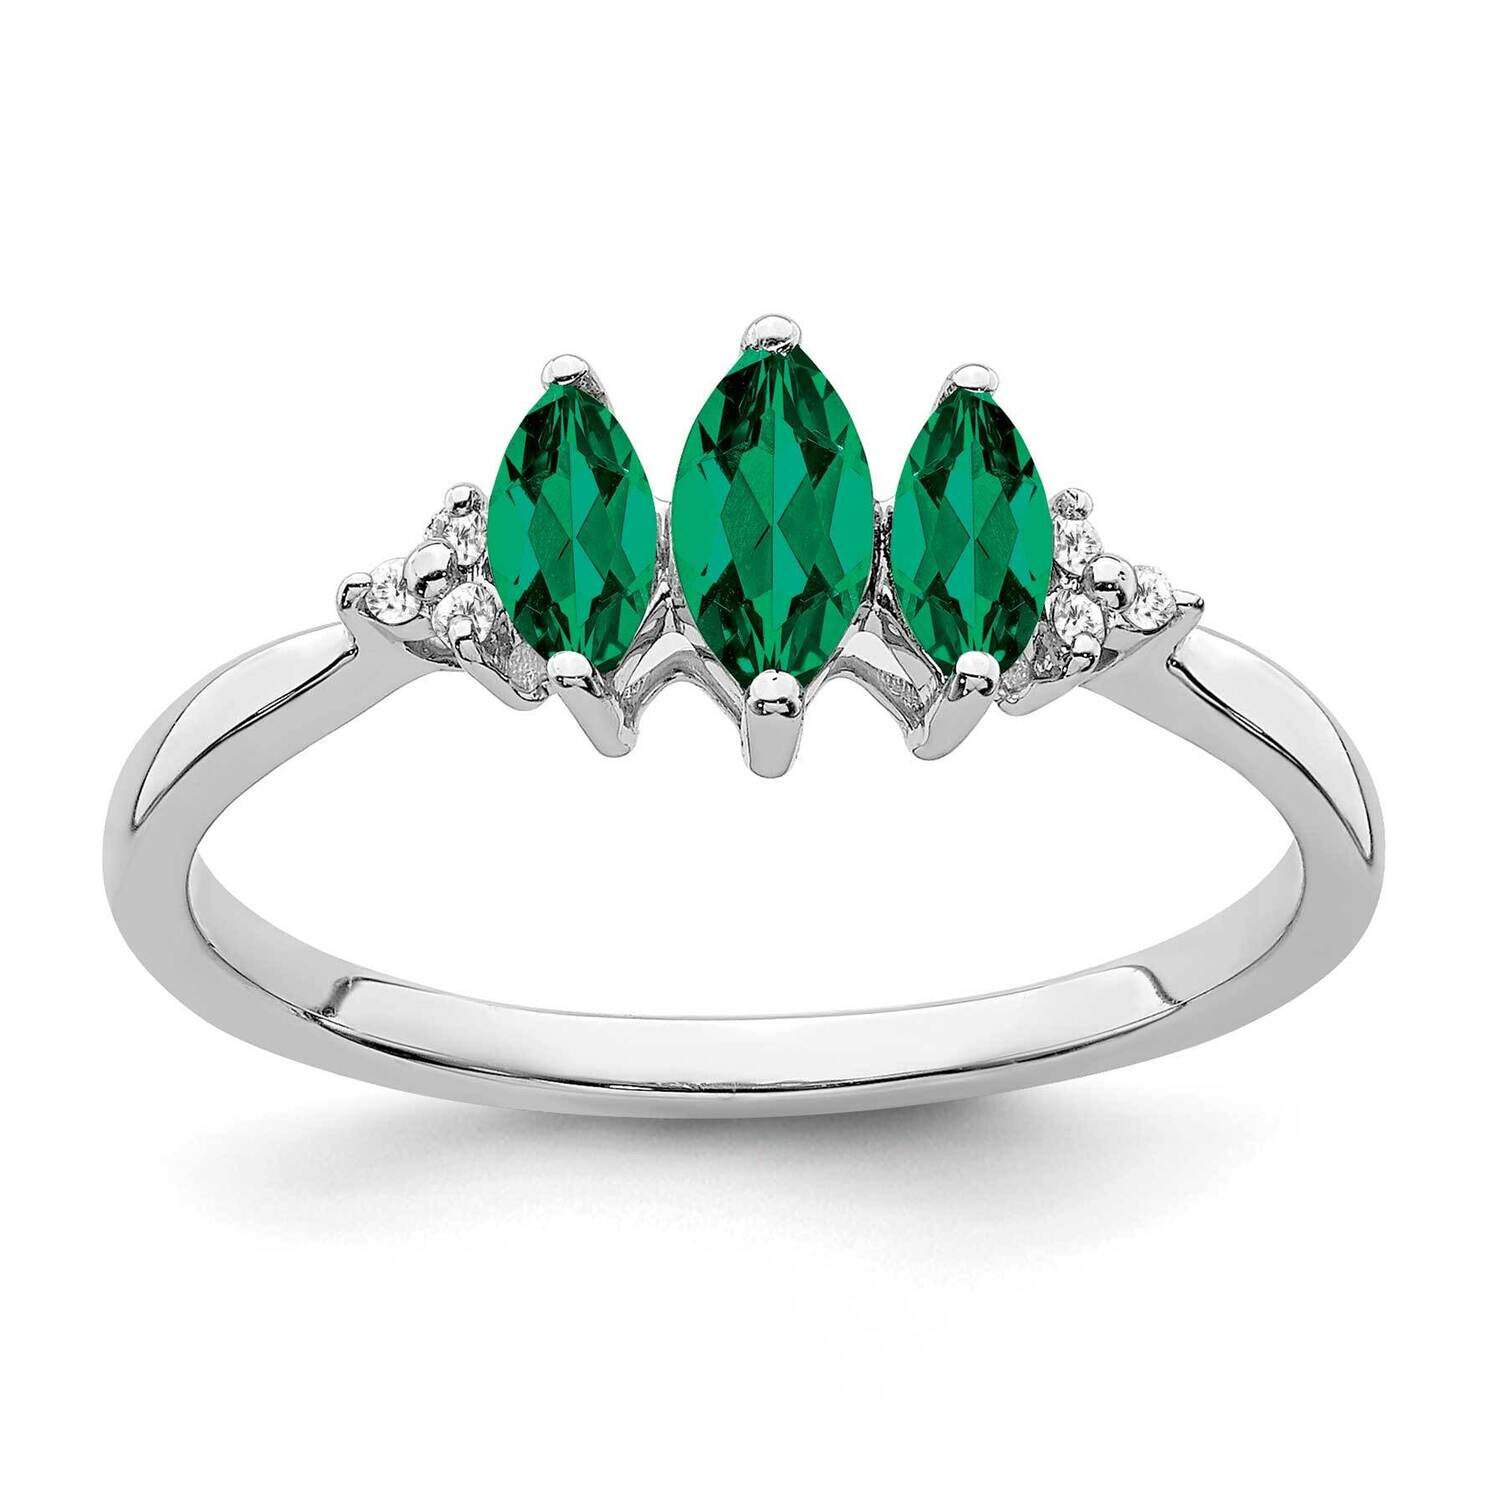 Marquise Created Emerald Diamond 3-Stone Ring 14k White Gold RM7236-EM-003-WA